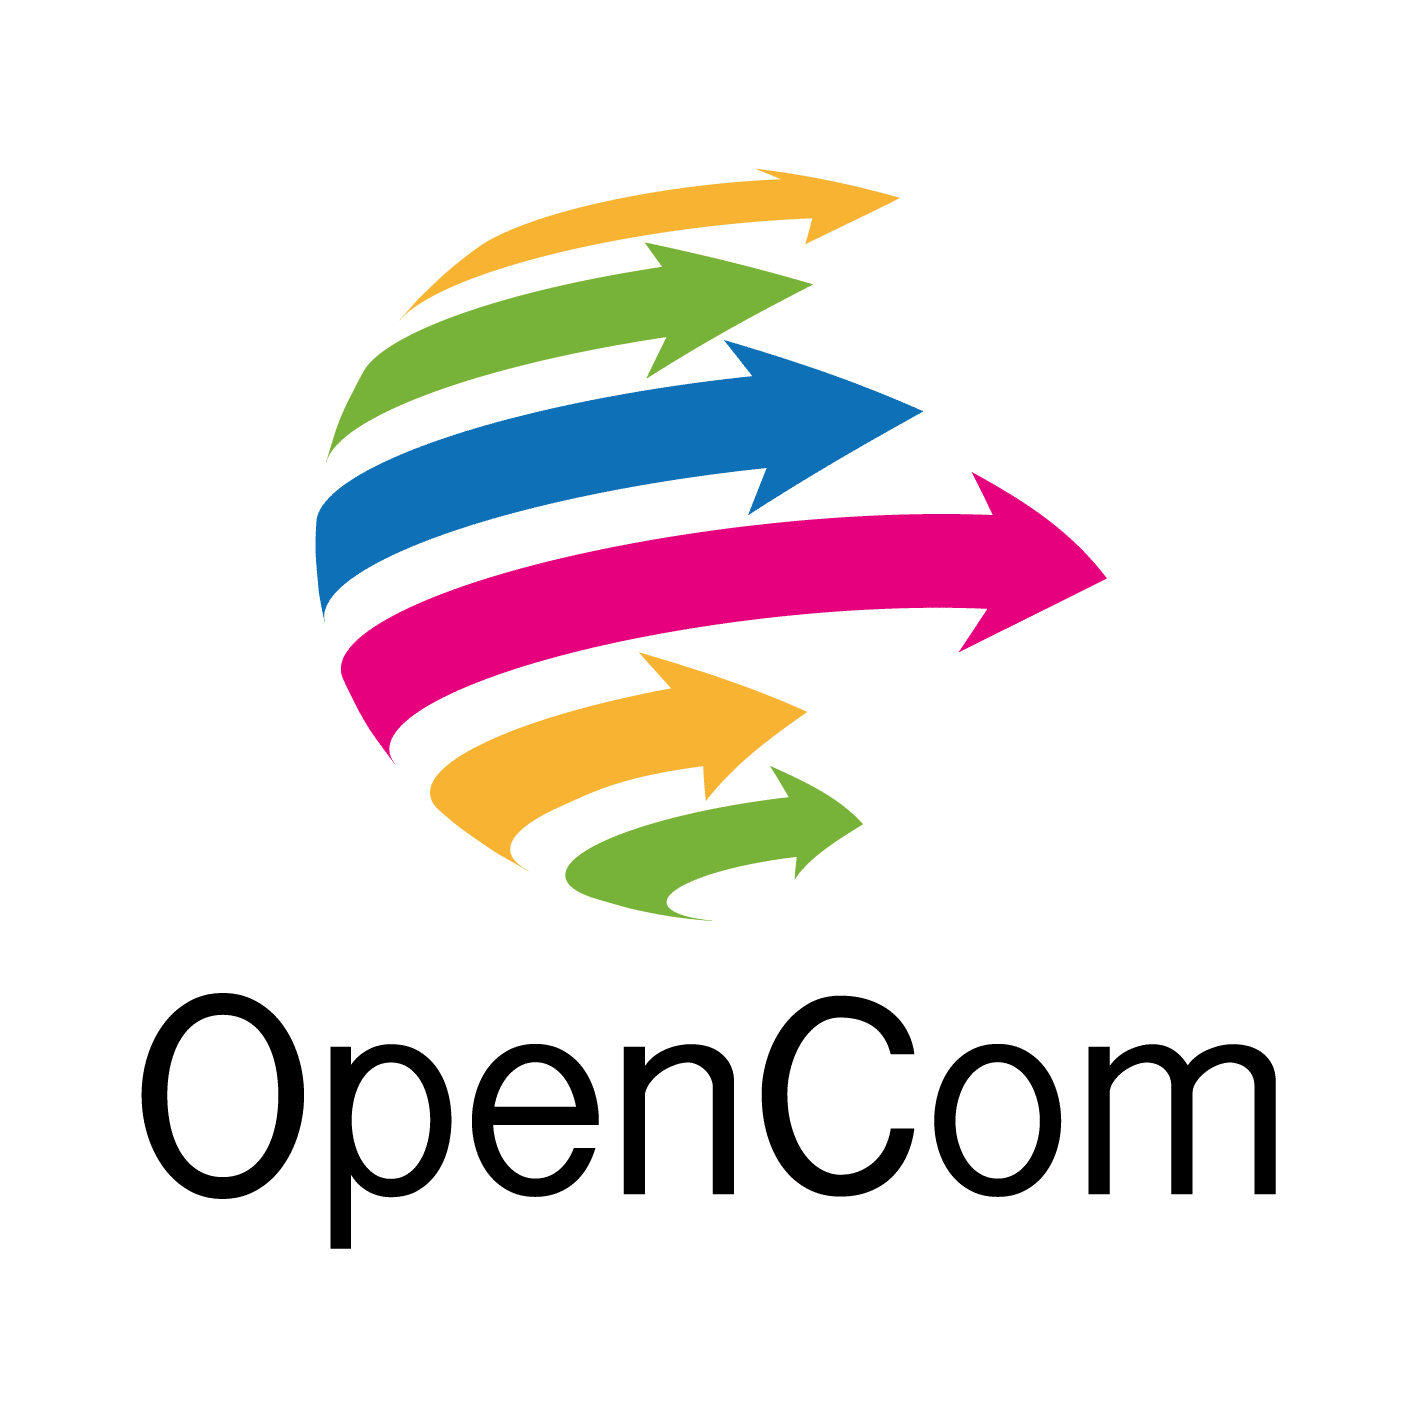 opencom